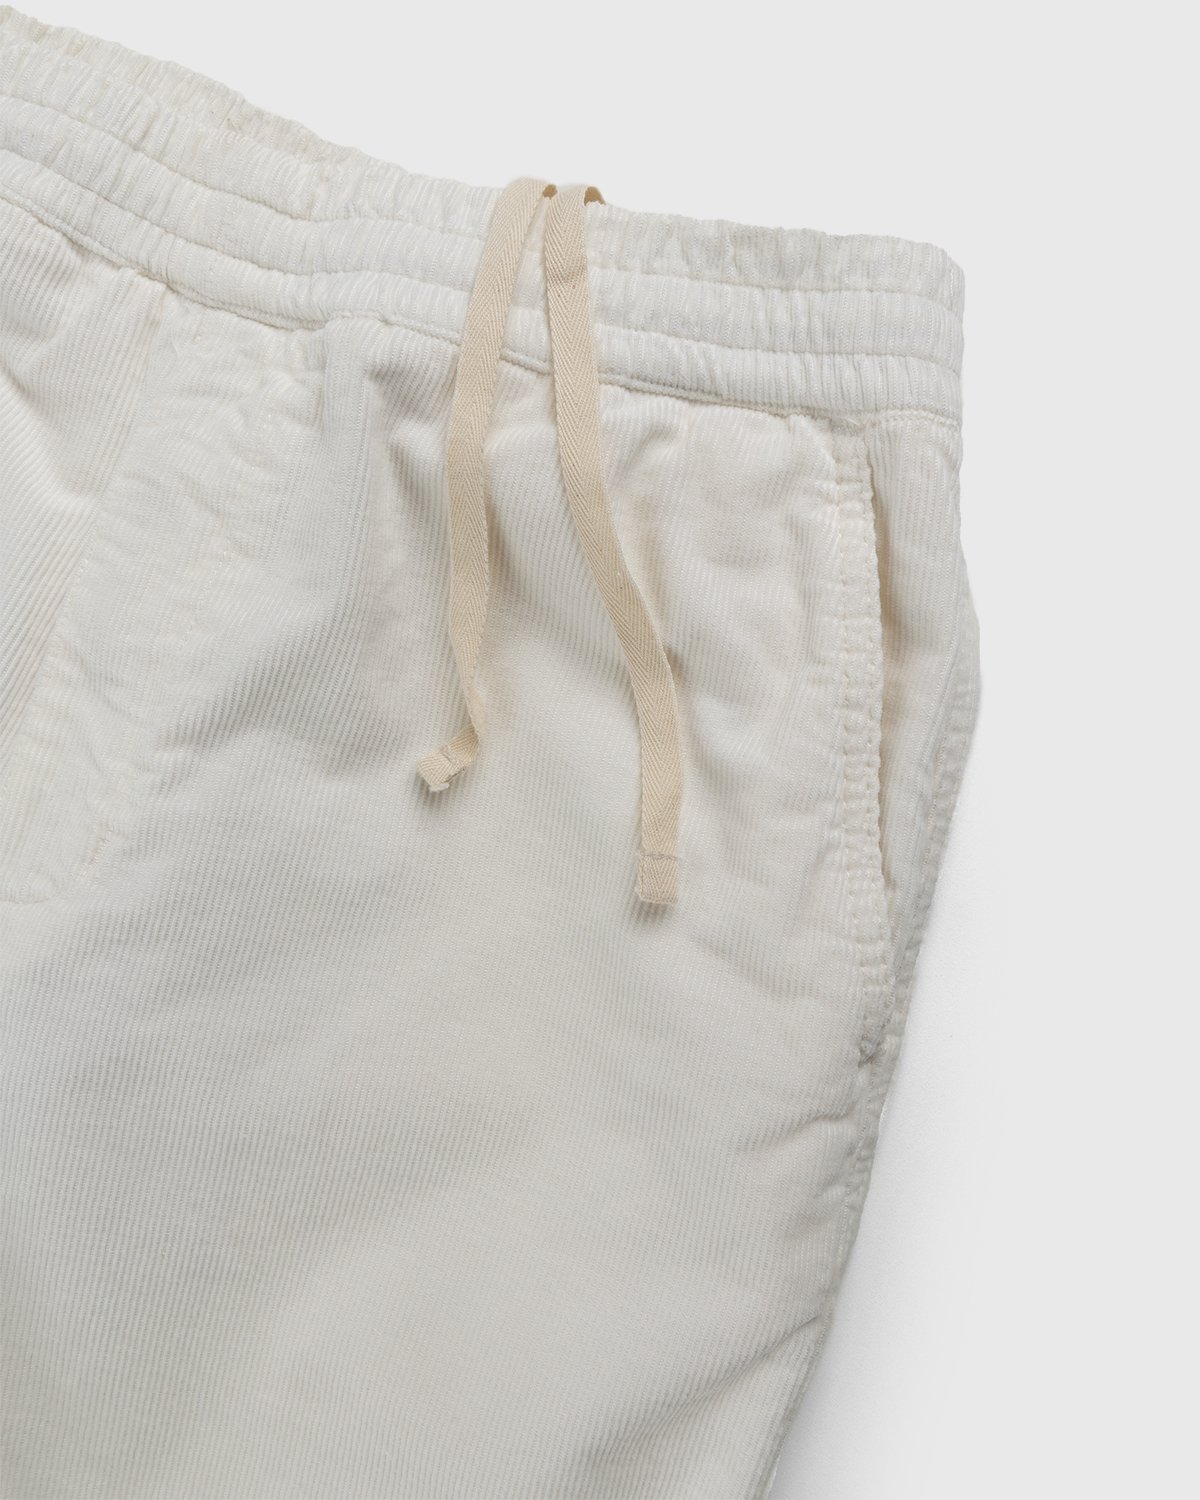 Carhartt WIP - Flint Short Wax Rinsed - Clothing - White - Image 4